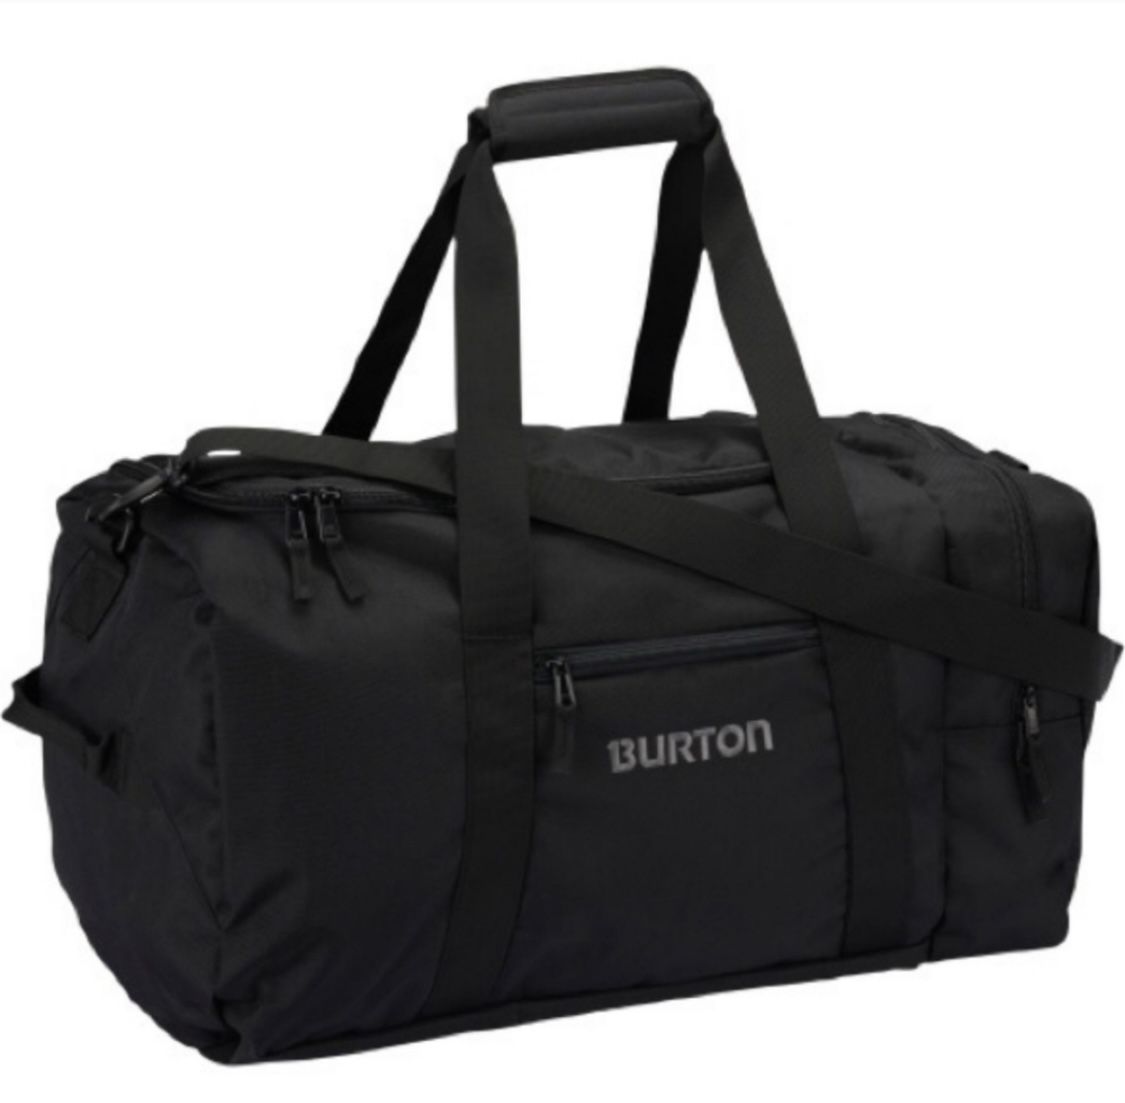 BURTON Classic 35L Duffle Bag